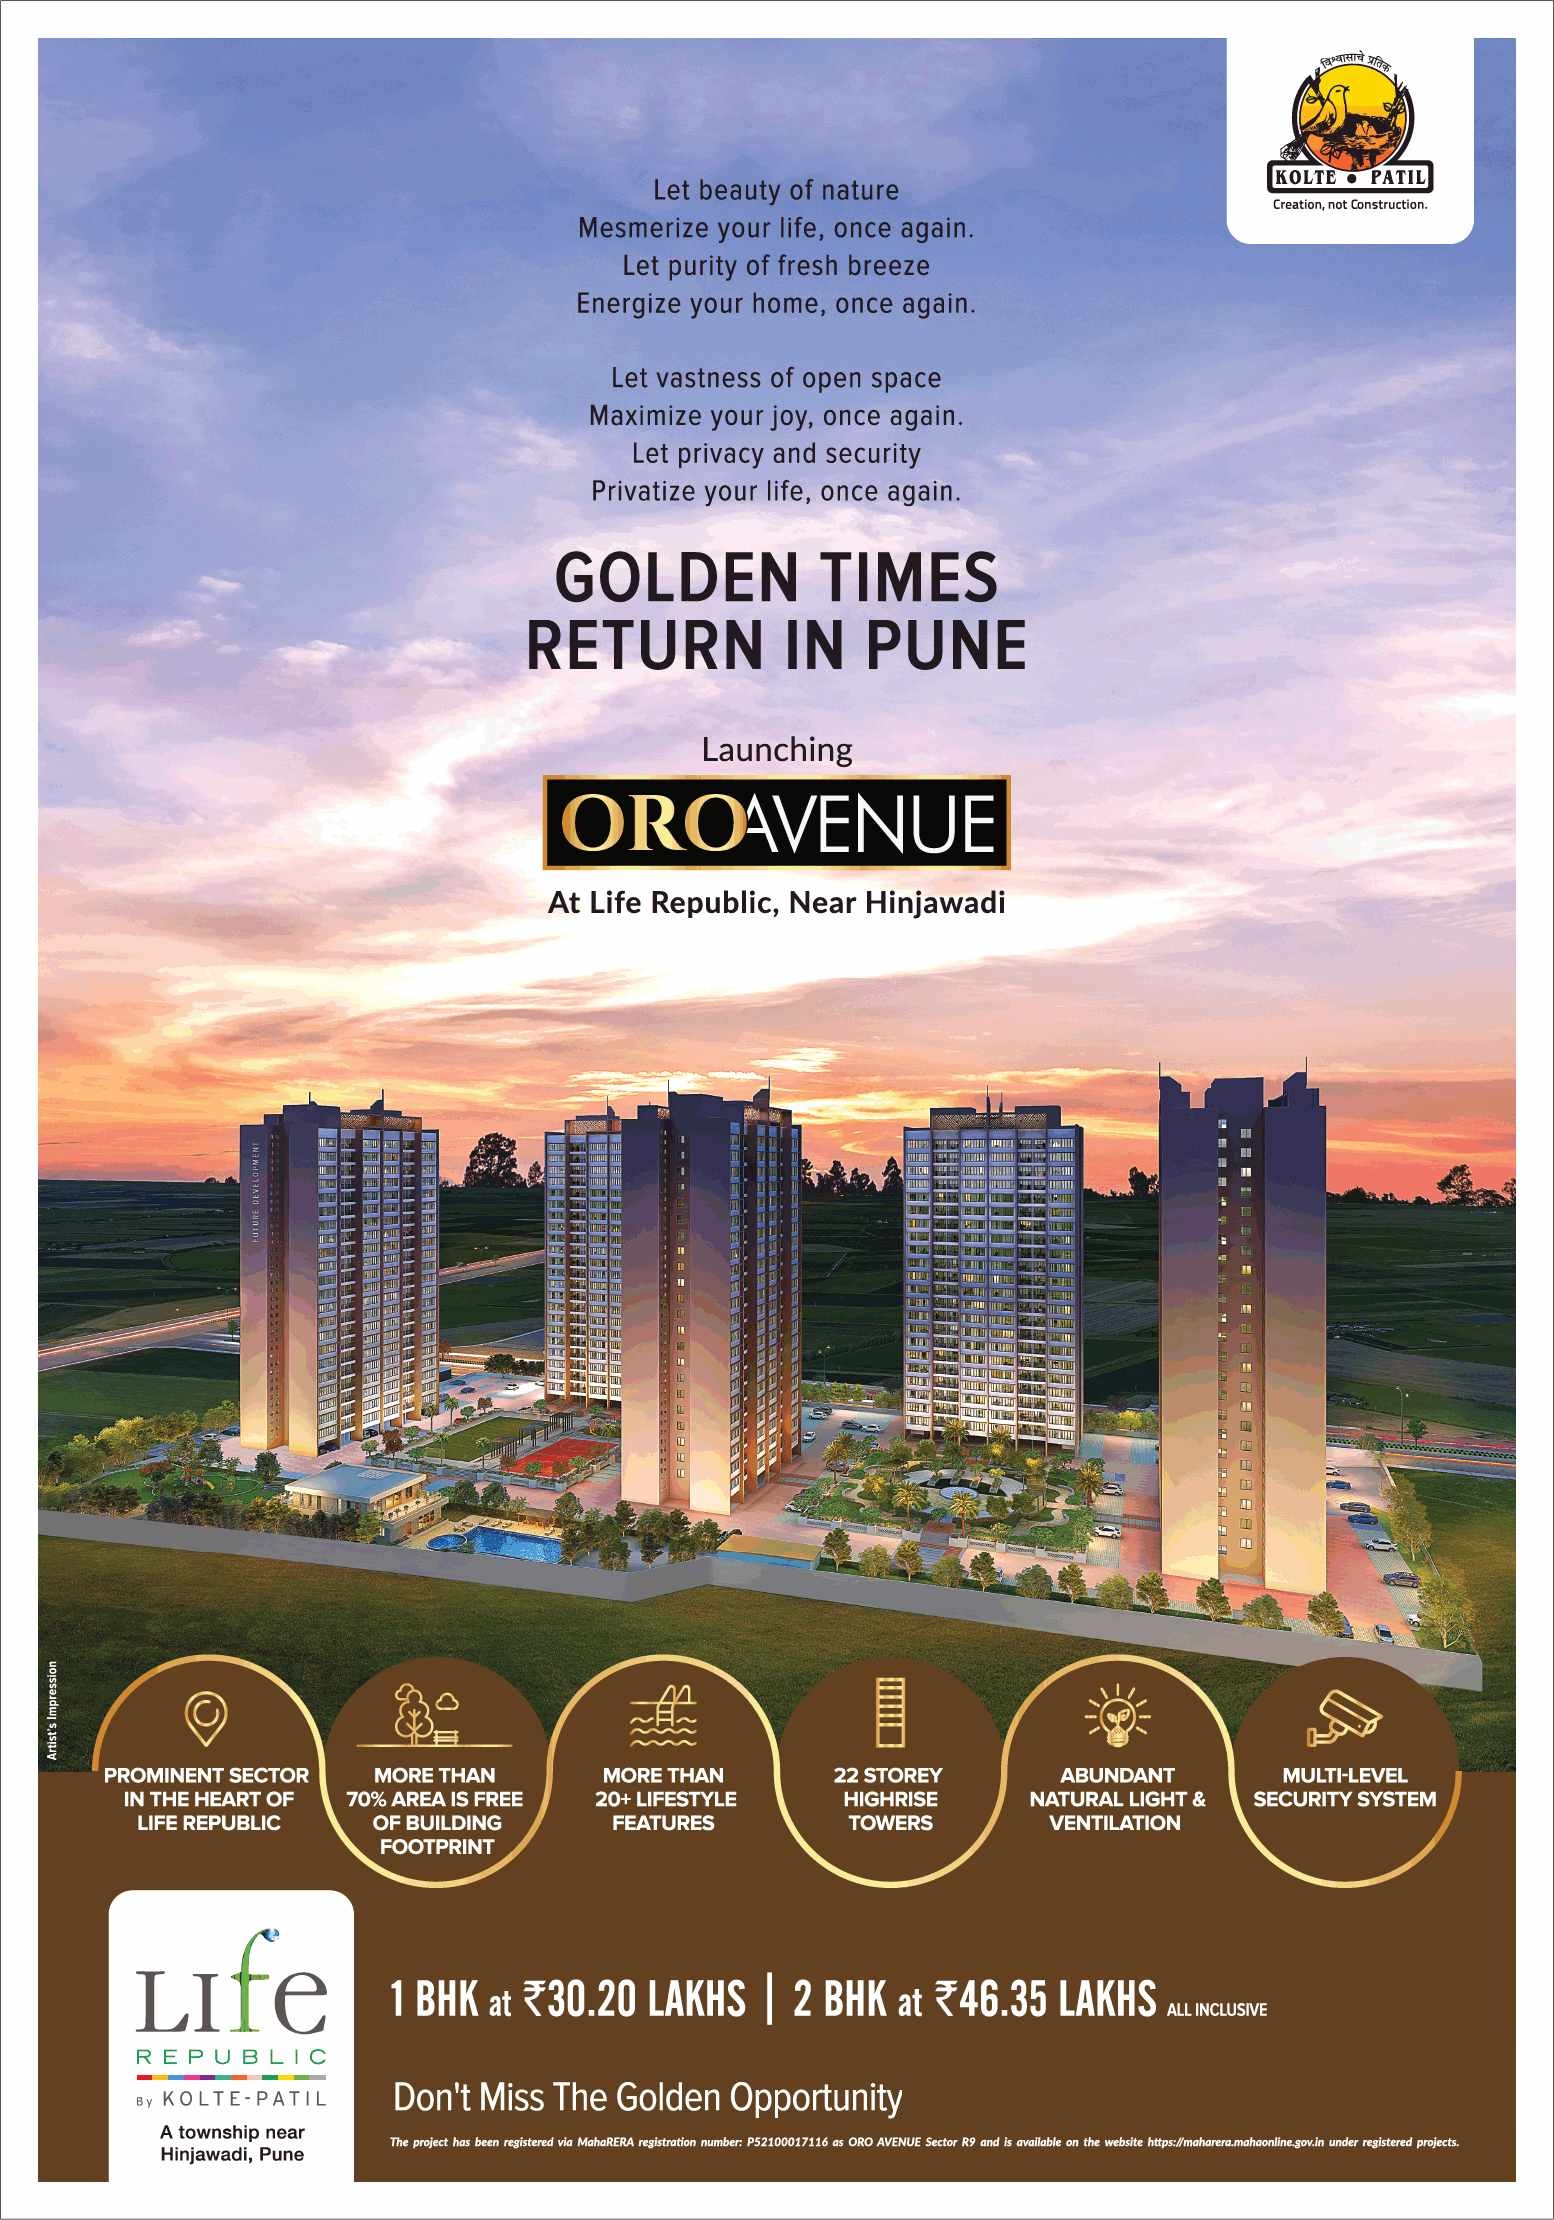 Book 1 & 2 bhk apartments at Kolte Patil Life Republic ORO Avenue in Pune Update